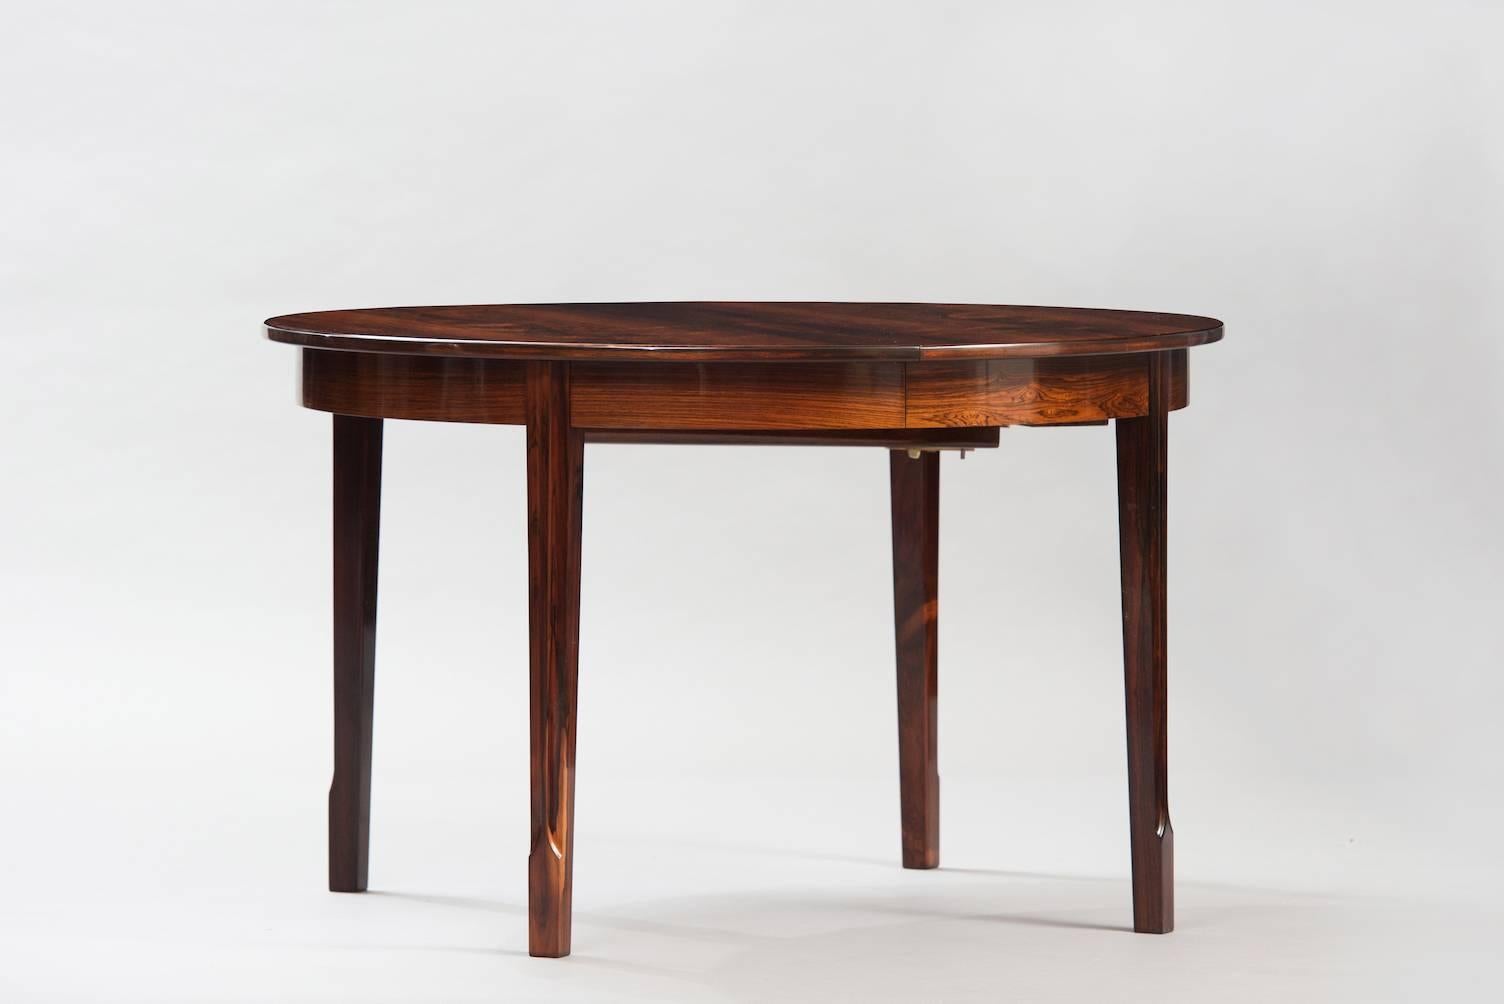 Large rosewood extendible dining table.
Measure: Diameter closed 120 cm.